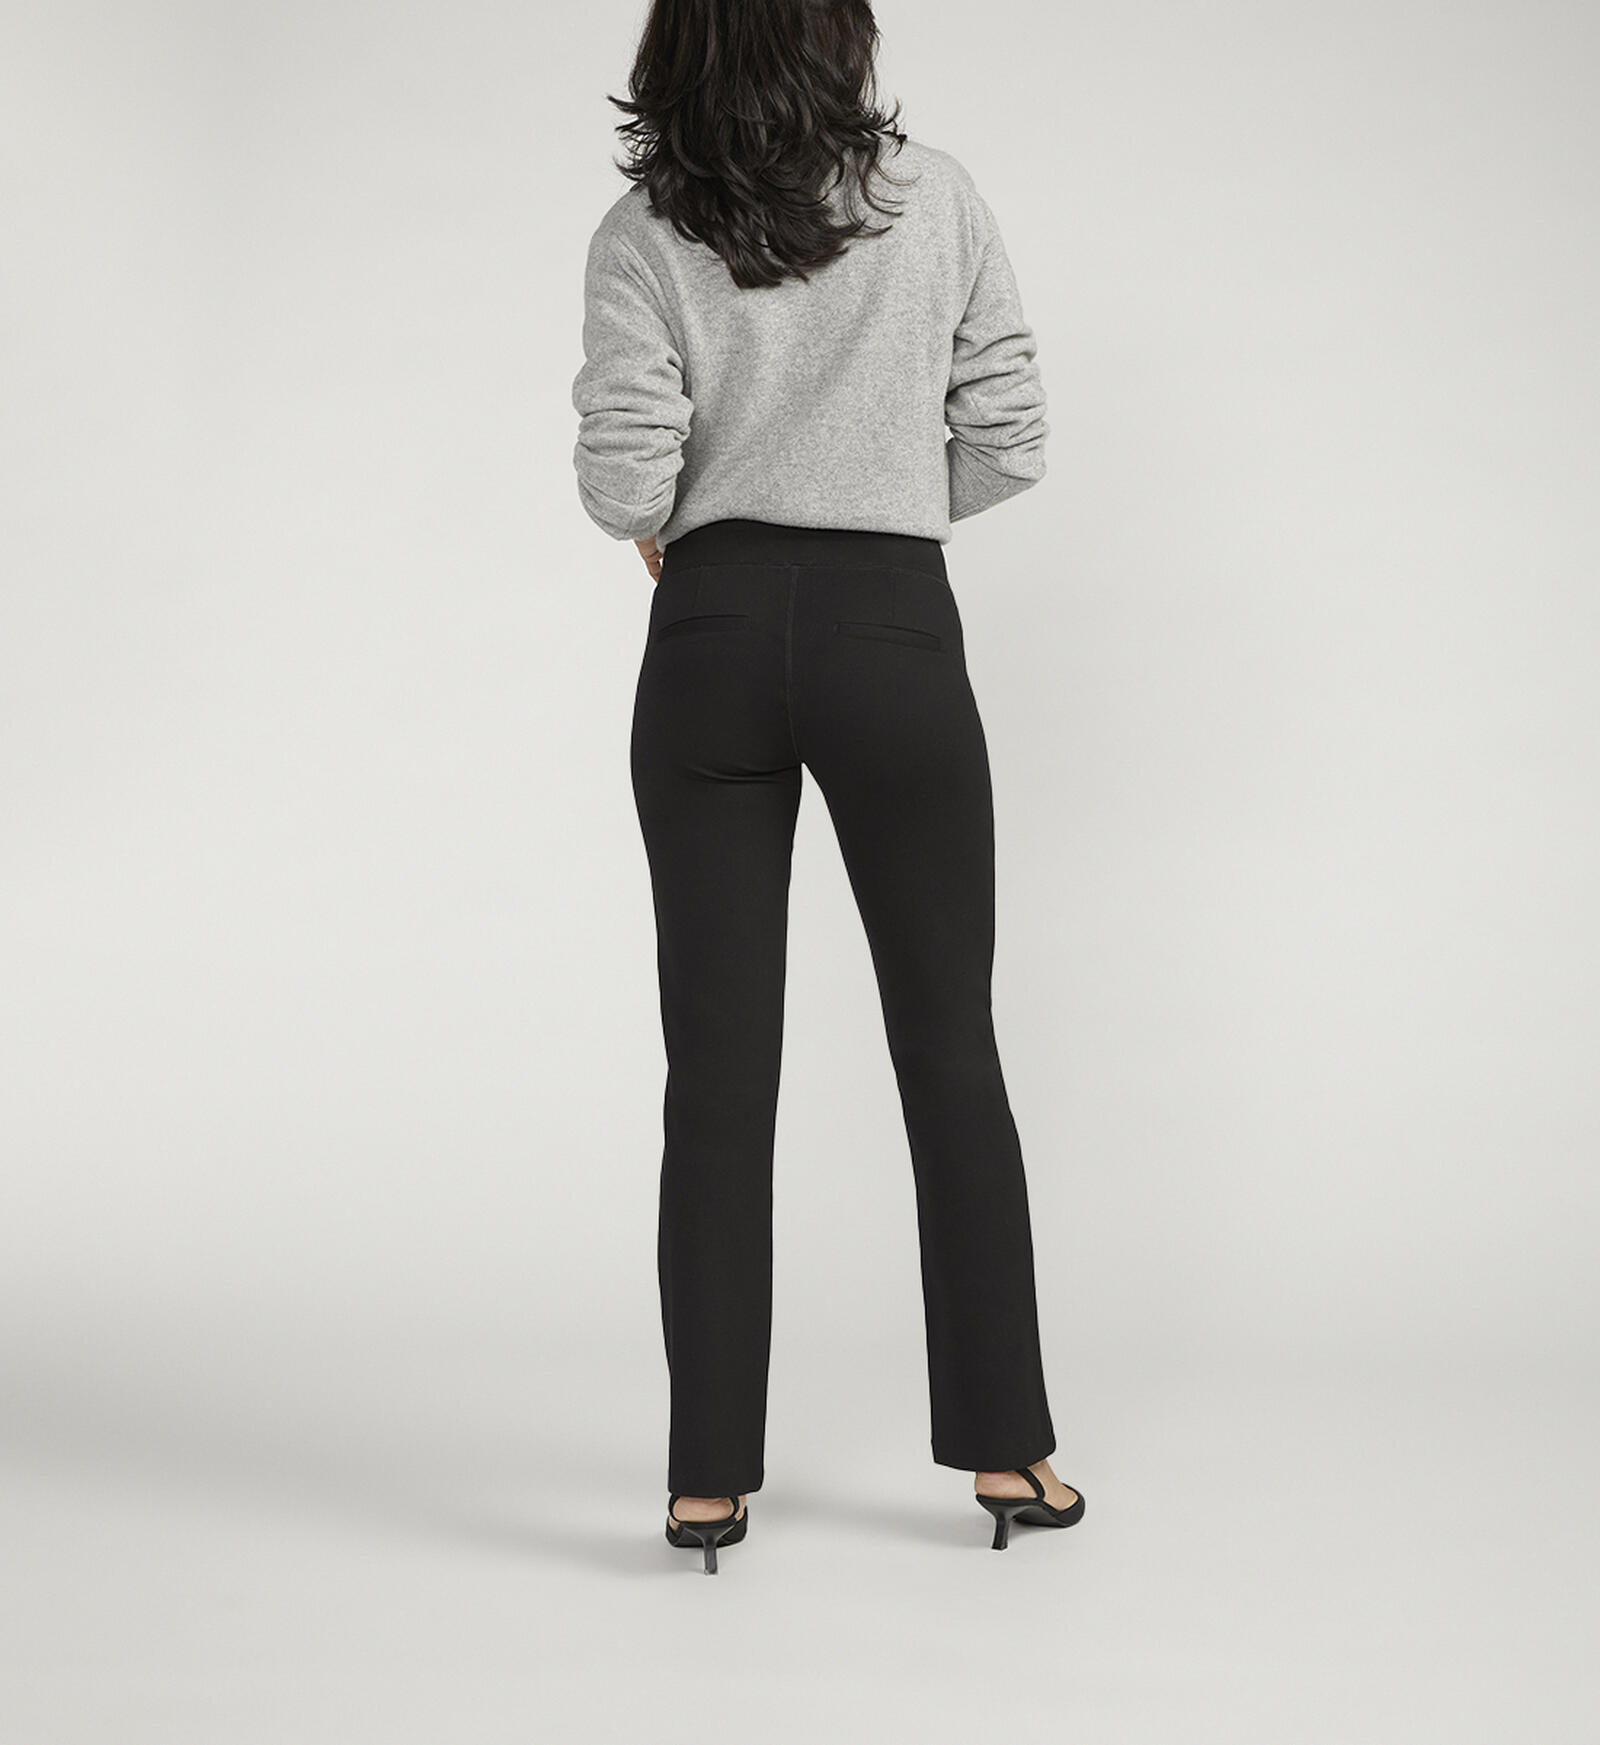 Betabrand Pants Womens 2XL Classic Dress Yoga Bootcut Pants Black